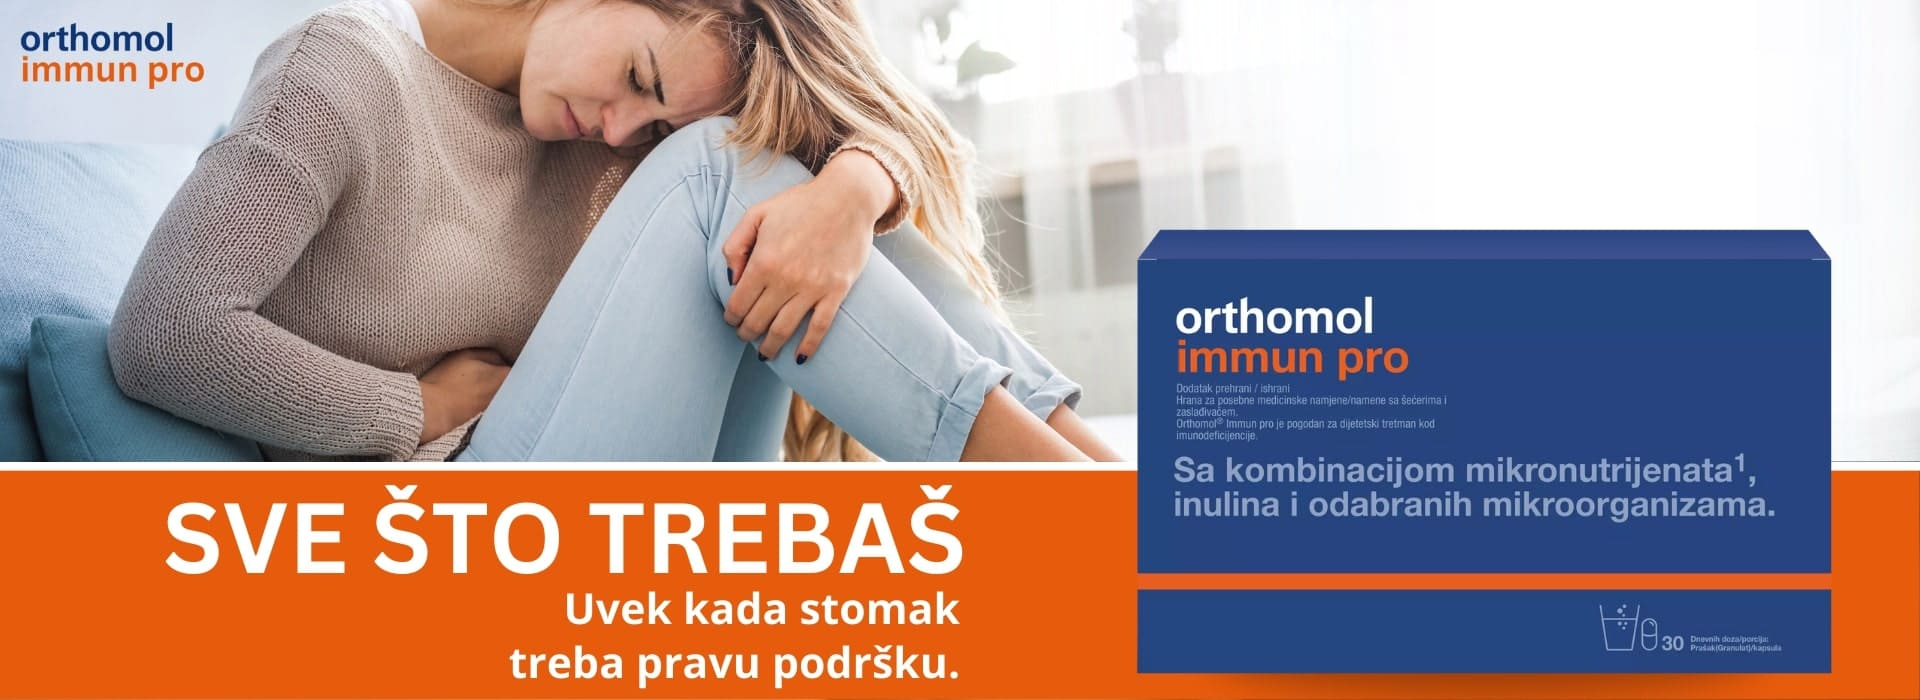 Orthomol Immun Pro brend - Srbotrade